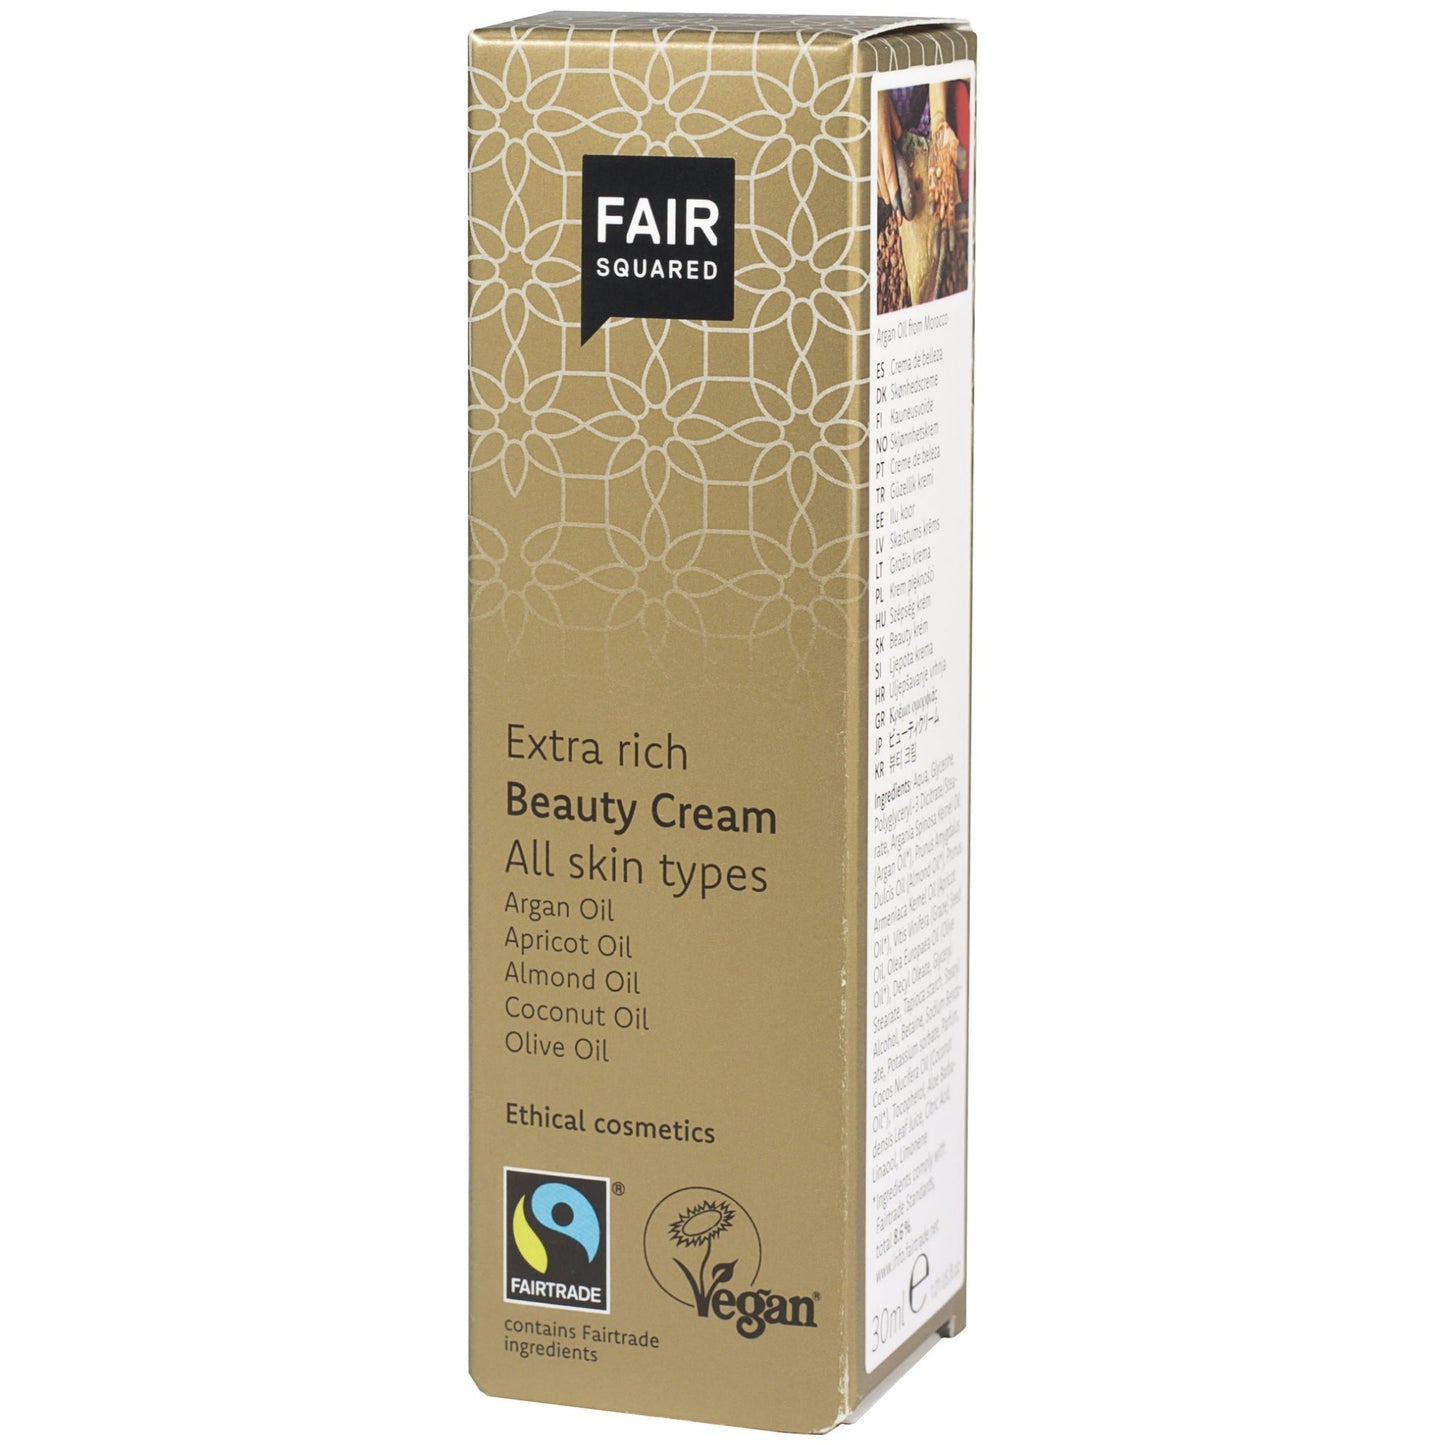 FAIR SQUARED Extra Rich Beauty Cream | Fairtrade Vegan Natural Halal | Box | BeoVERDE.ie